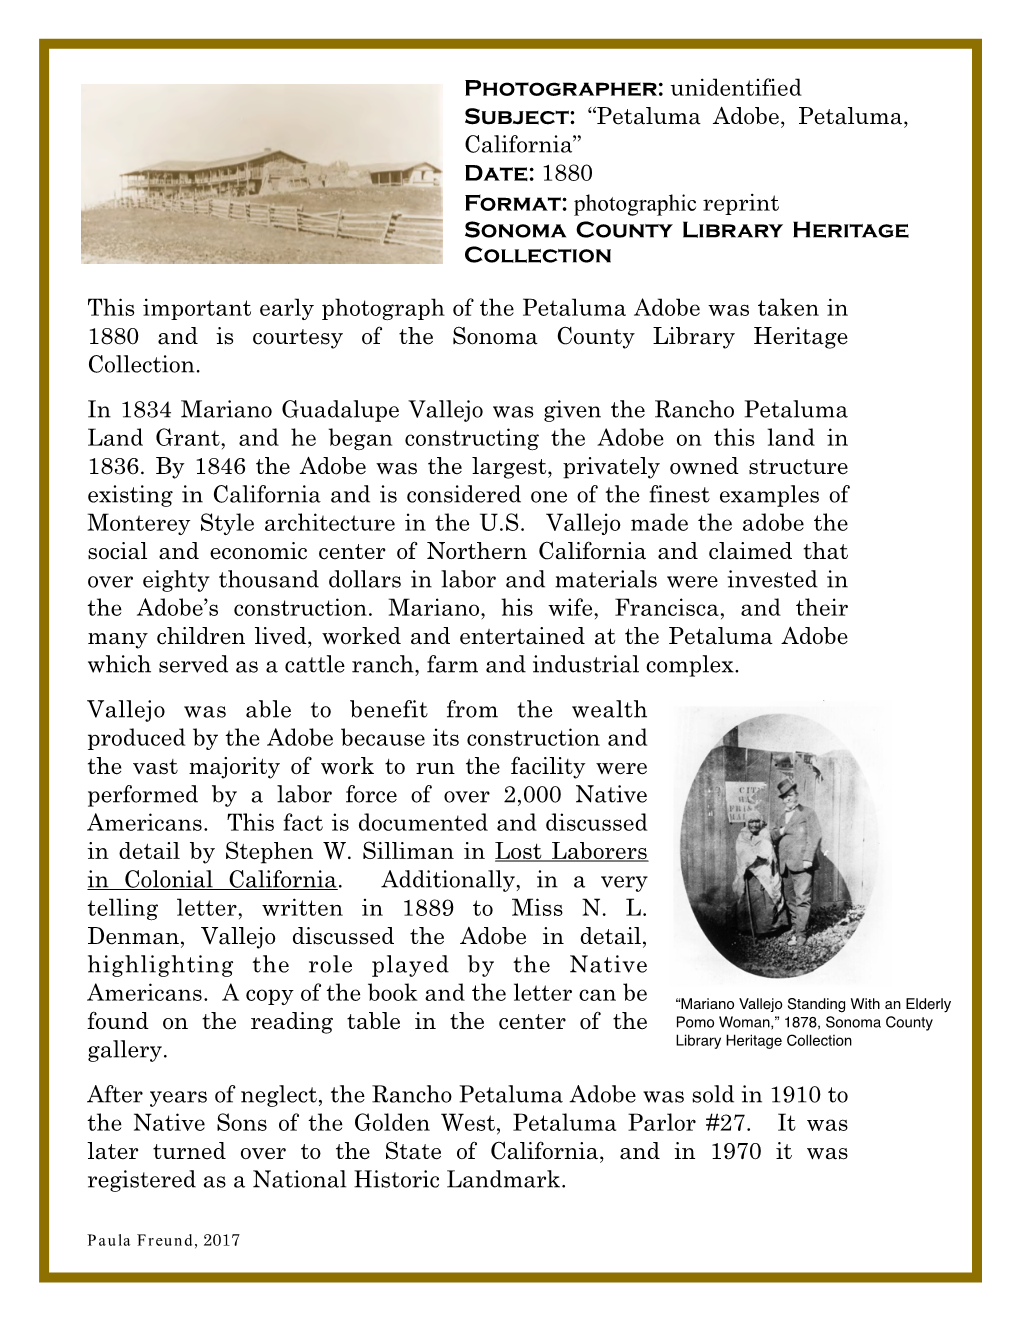 Petaluma Adobe, Petaluma, California” Date: 1880 Format: Photographic Reprint Sonoma County Library Heritage Collection